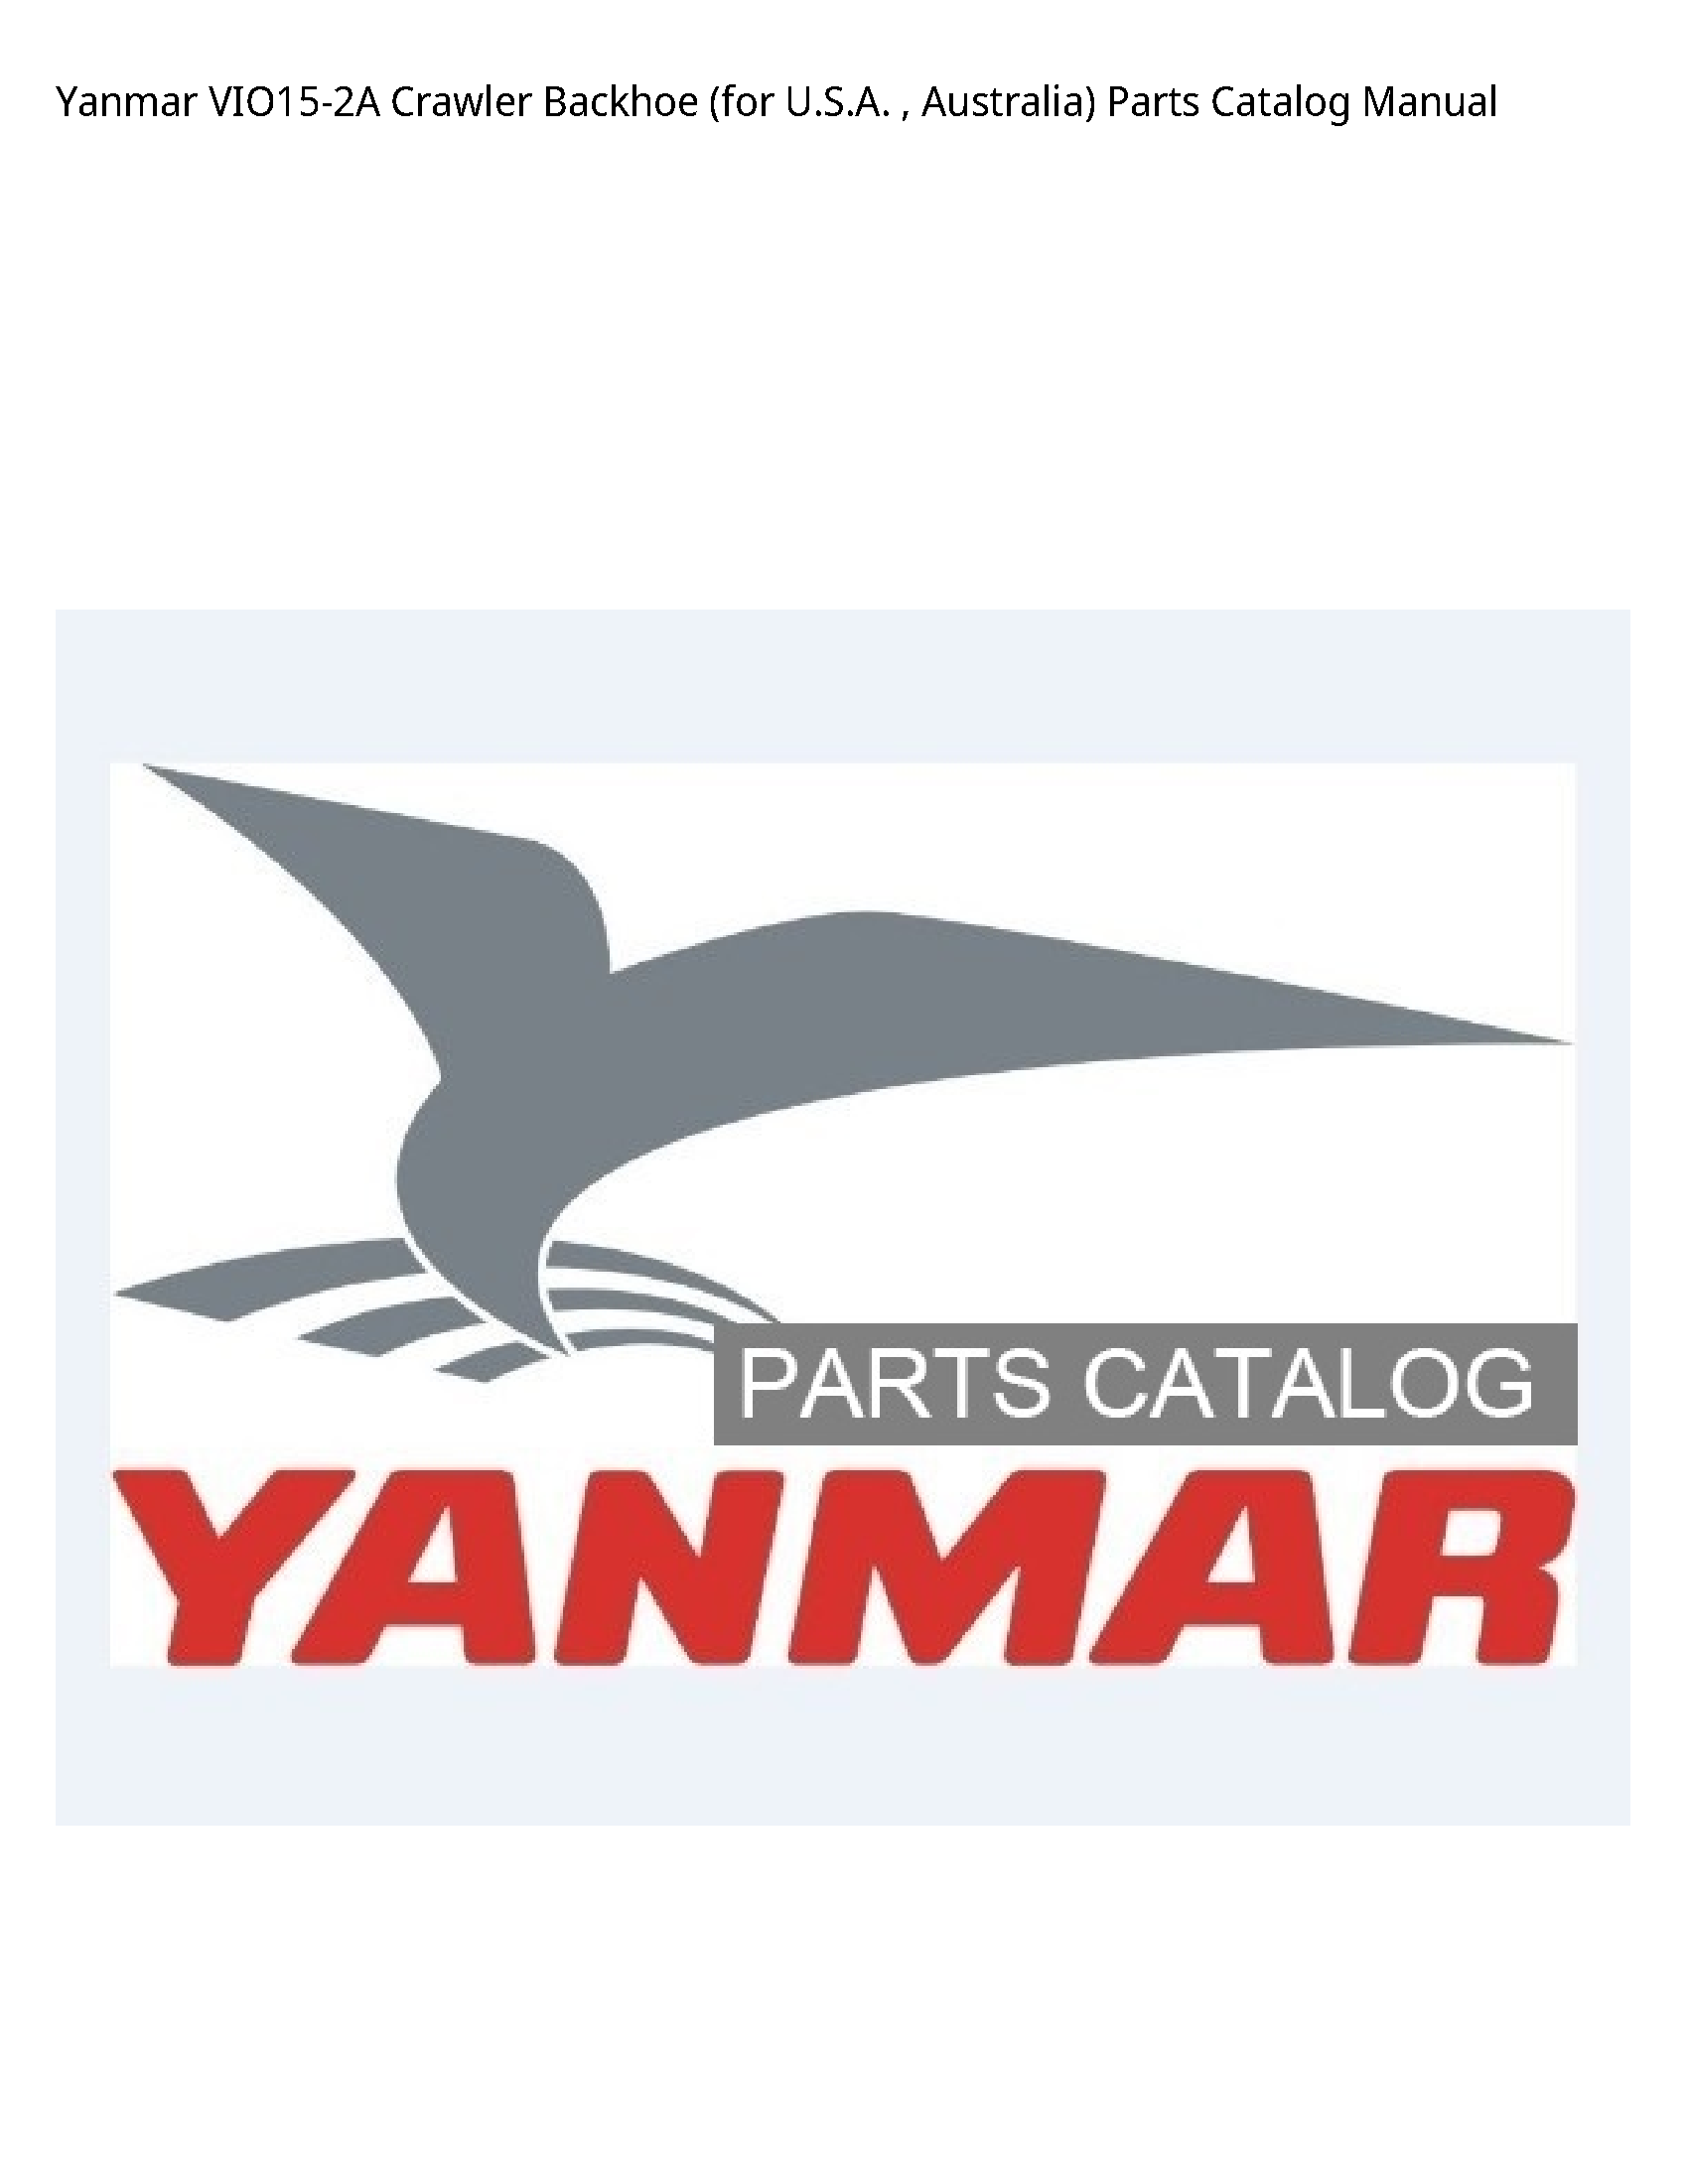 Yanmar VIO15-2A Crawler Backhoe (for U.S.A. Australia) Parts Catalog manual